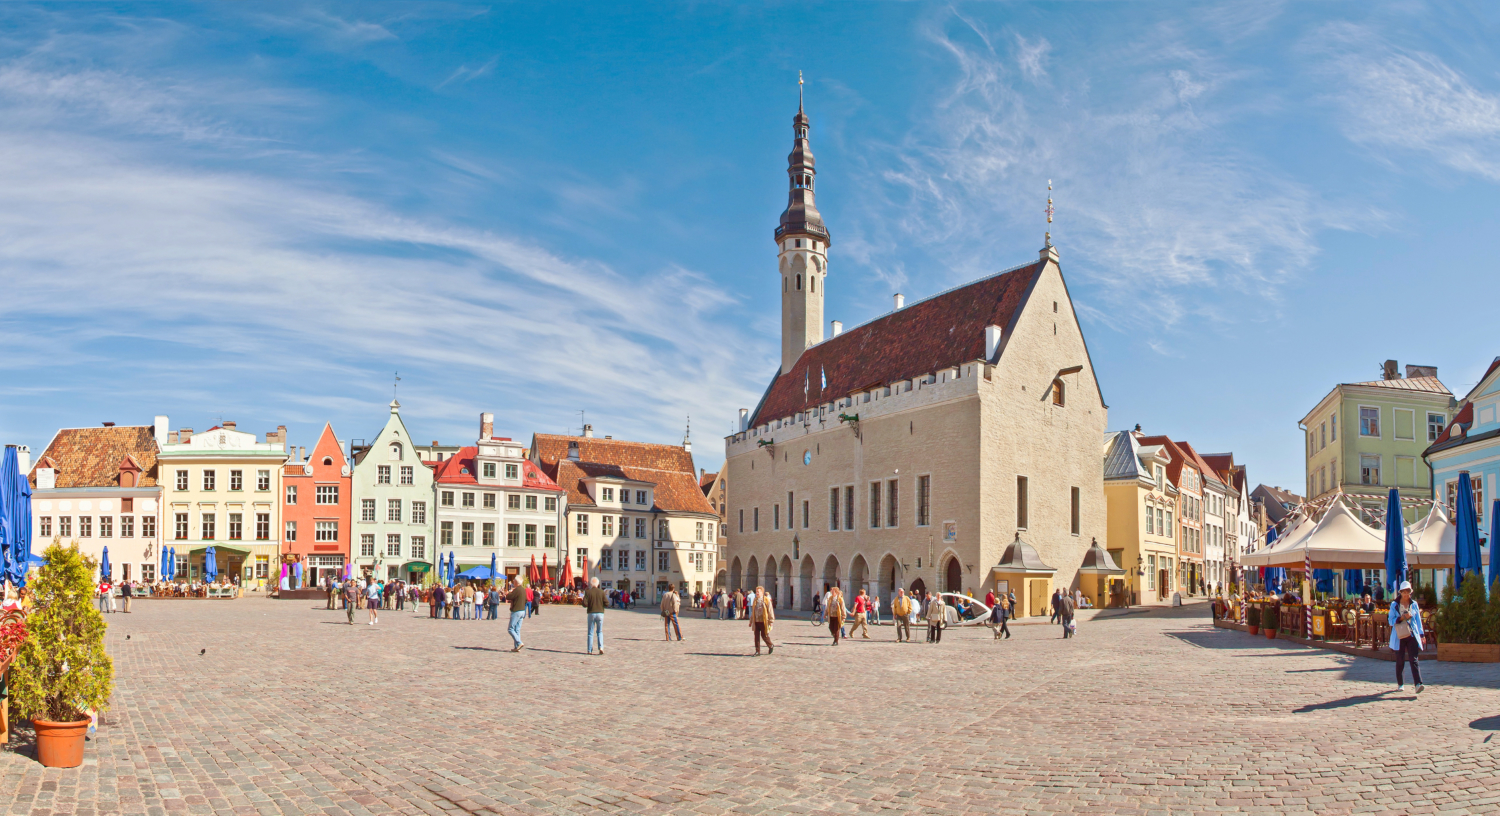 Tallinn Town Hall and Town Hall Square in Tallinn, Estonia 